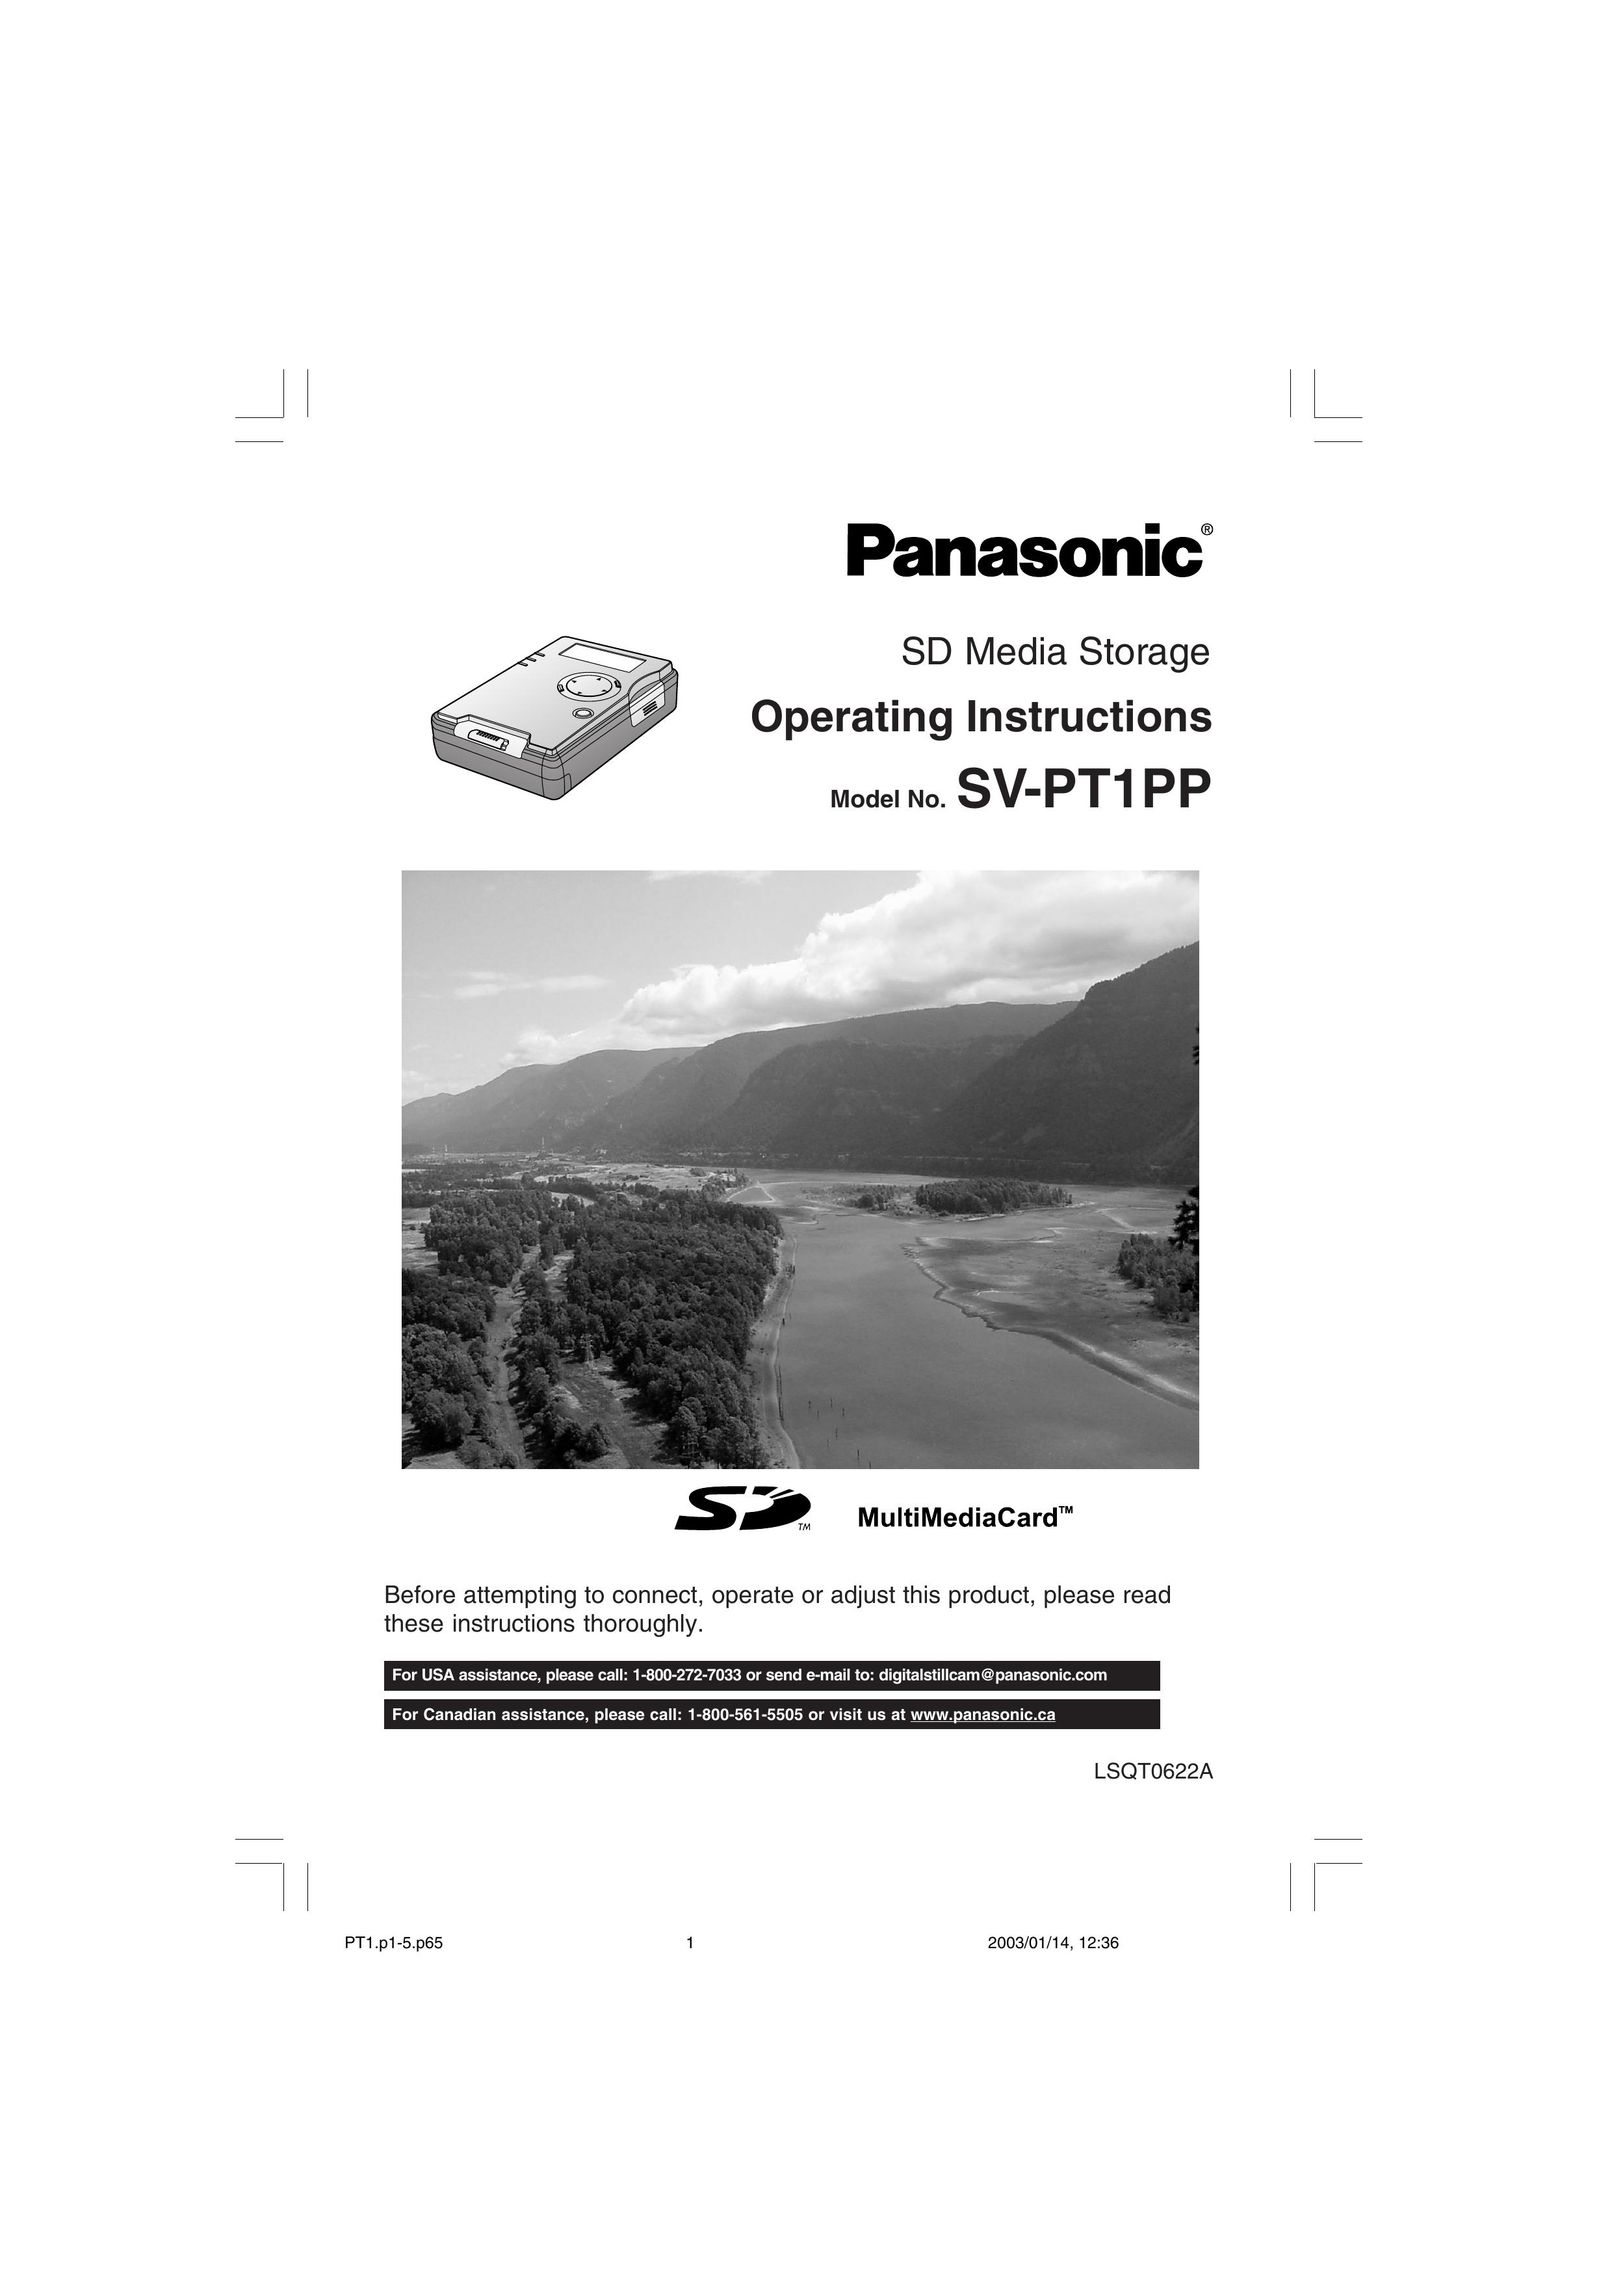 Panasonic SV-PT1PP Portable Media Storage User Manual